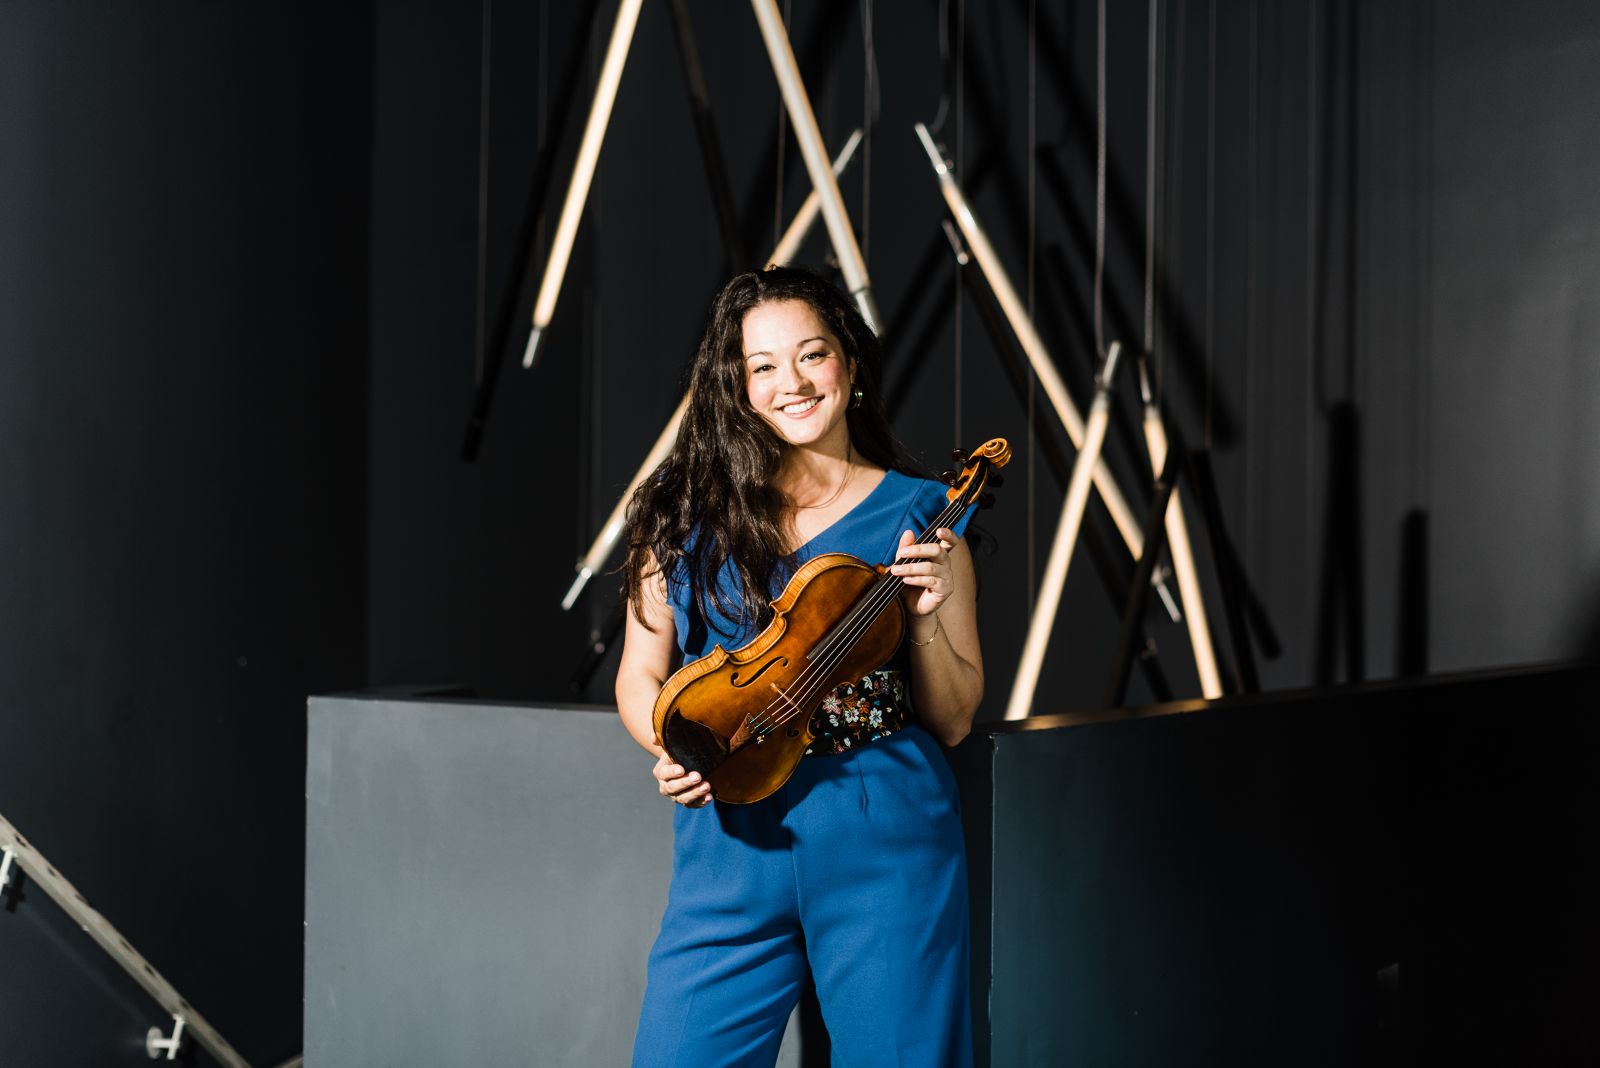 Kumiko Sakamoto smiles while holding her instrument